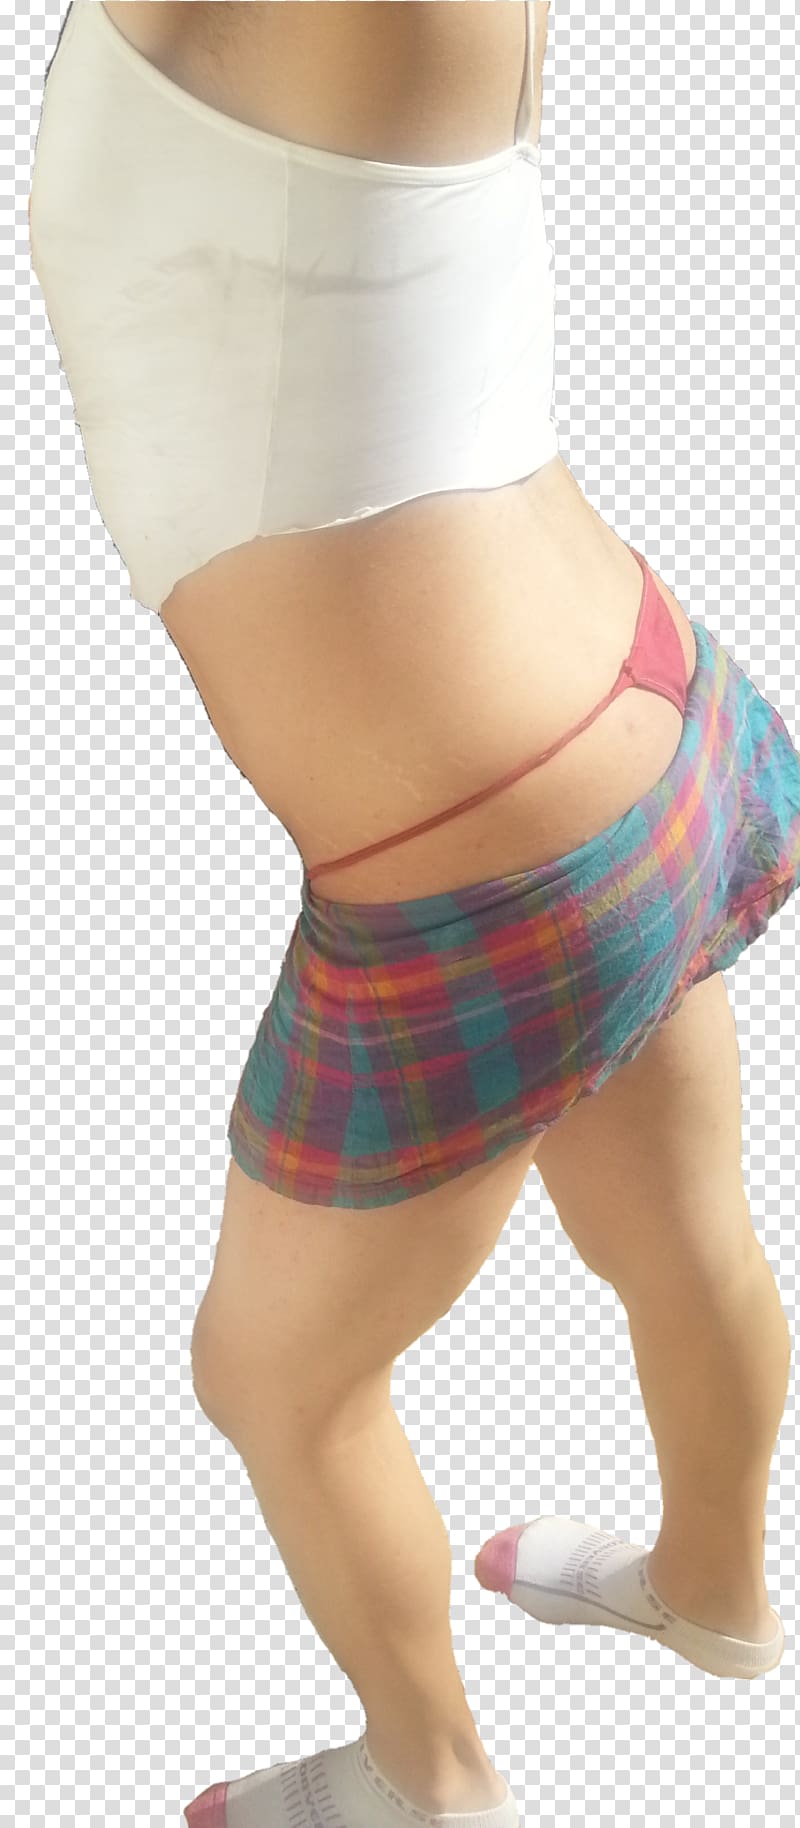 Panties Waist Active Undergarment Underpants Briefs, tights transparent background PNG clipart